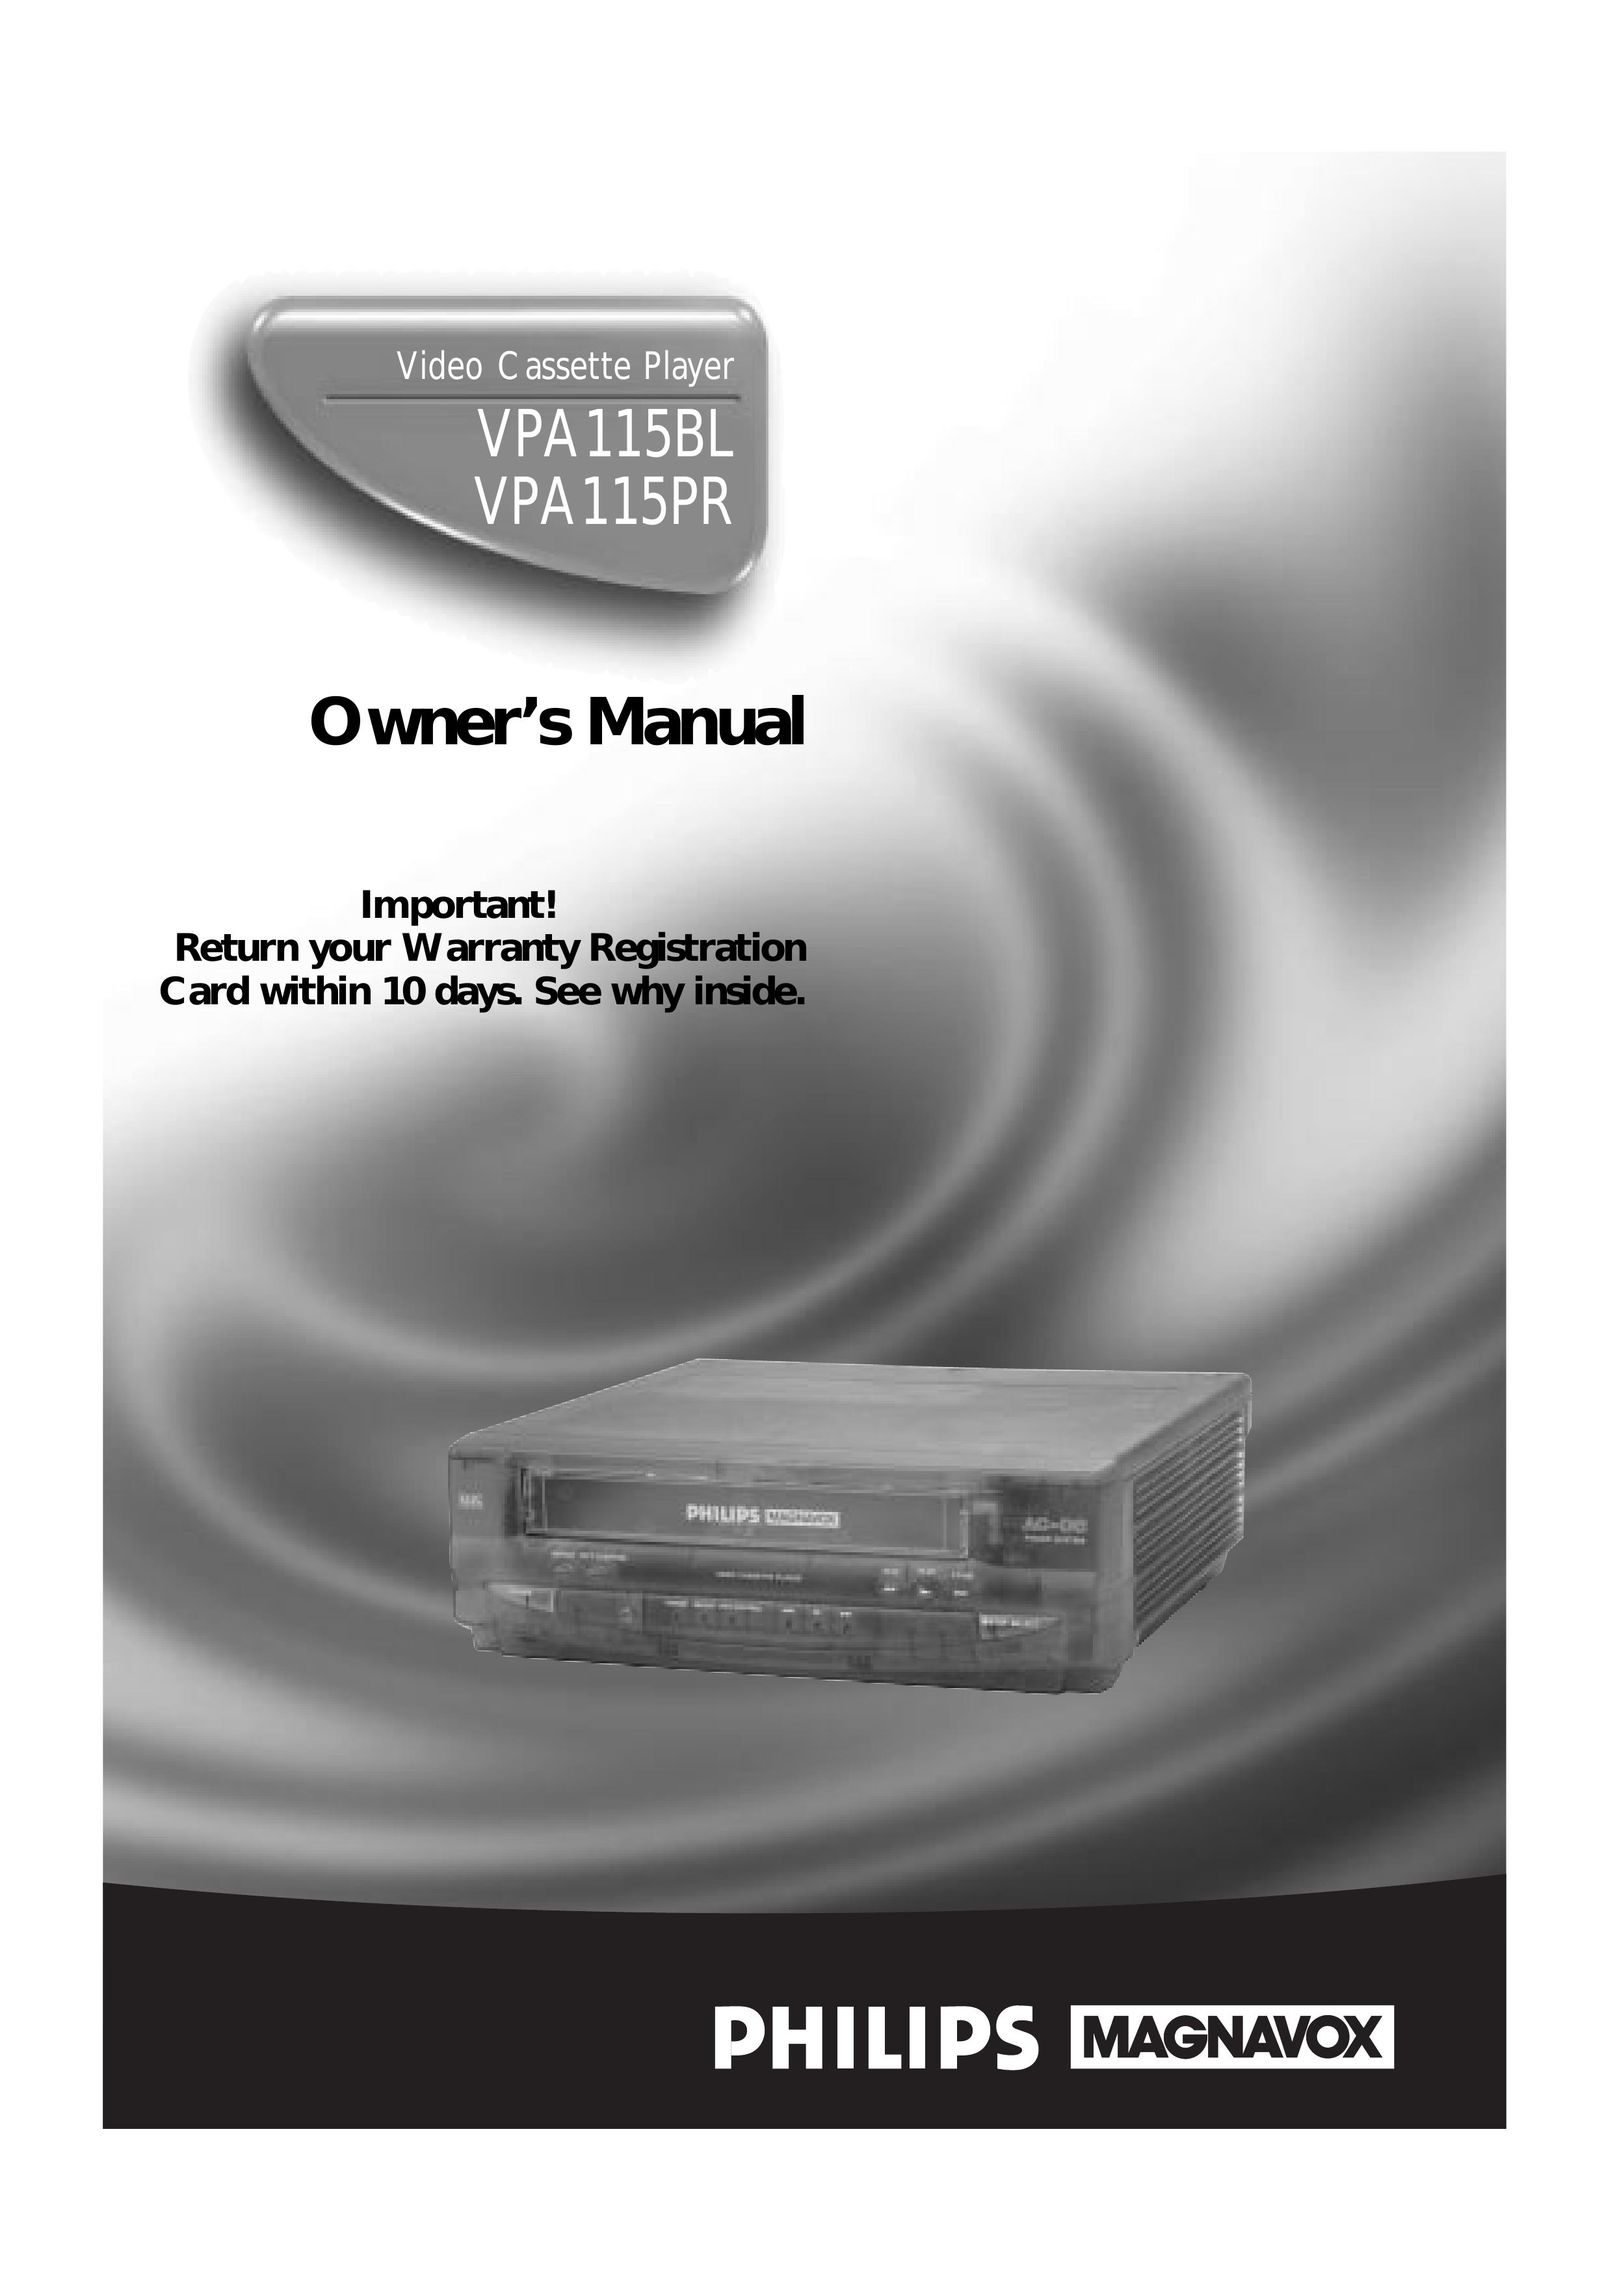 Magnavox VPA115PR Cassette Player User Manual (Page 1)